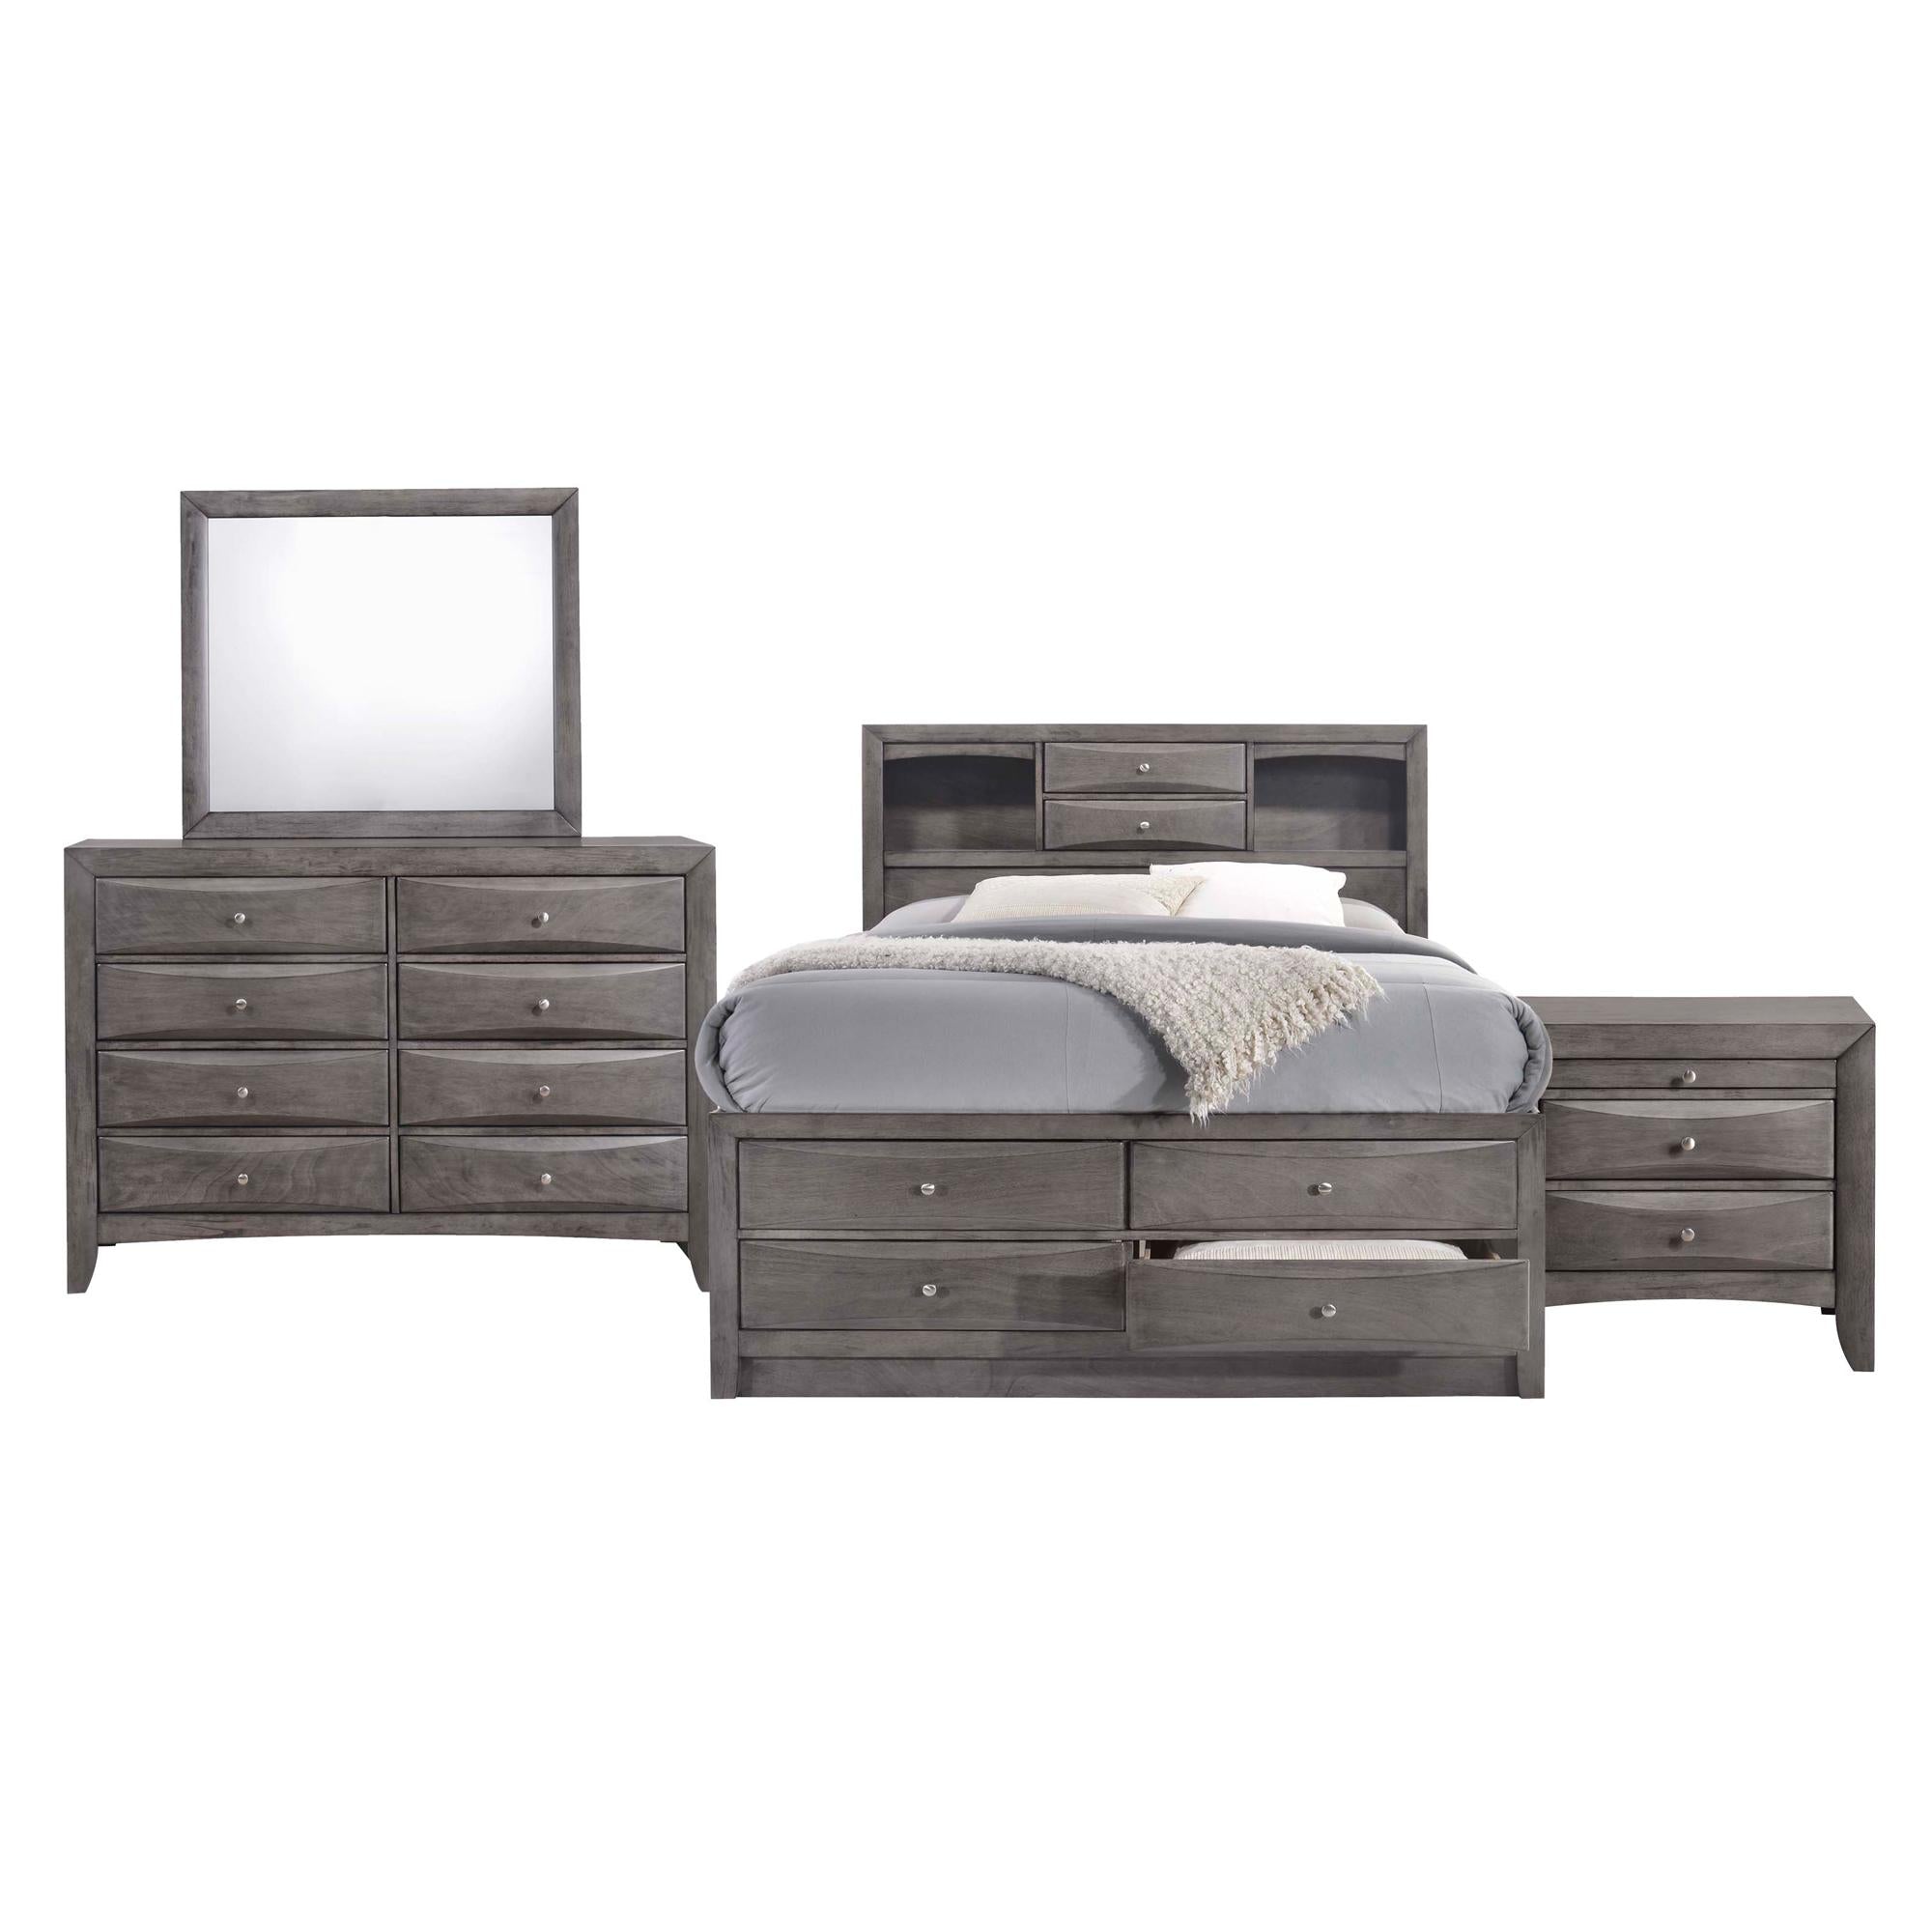 Aries Gray 4pc Bedroom Set with Storage Queen Bed